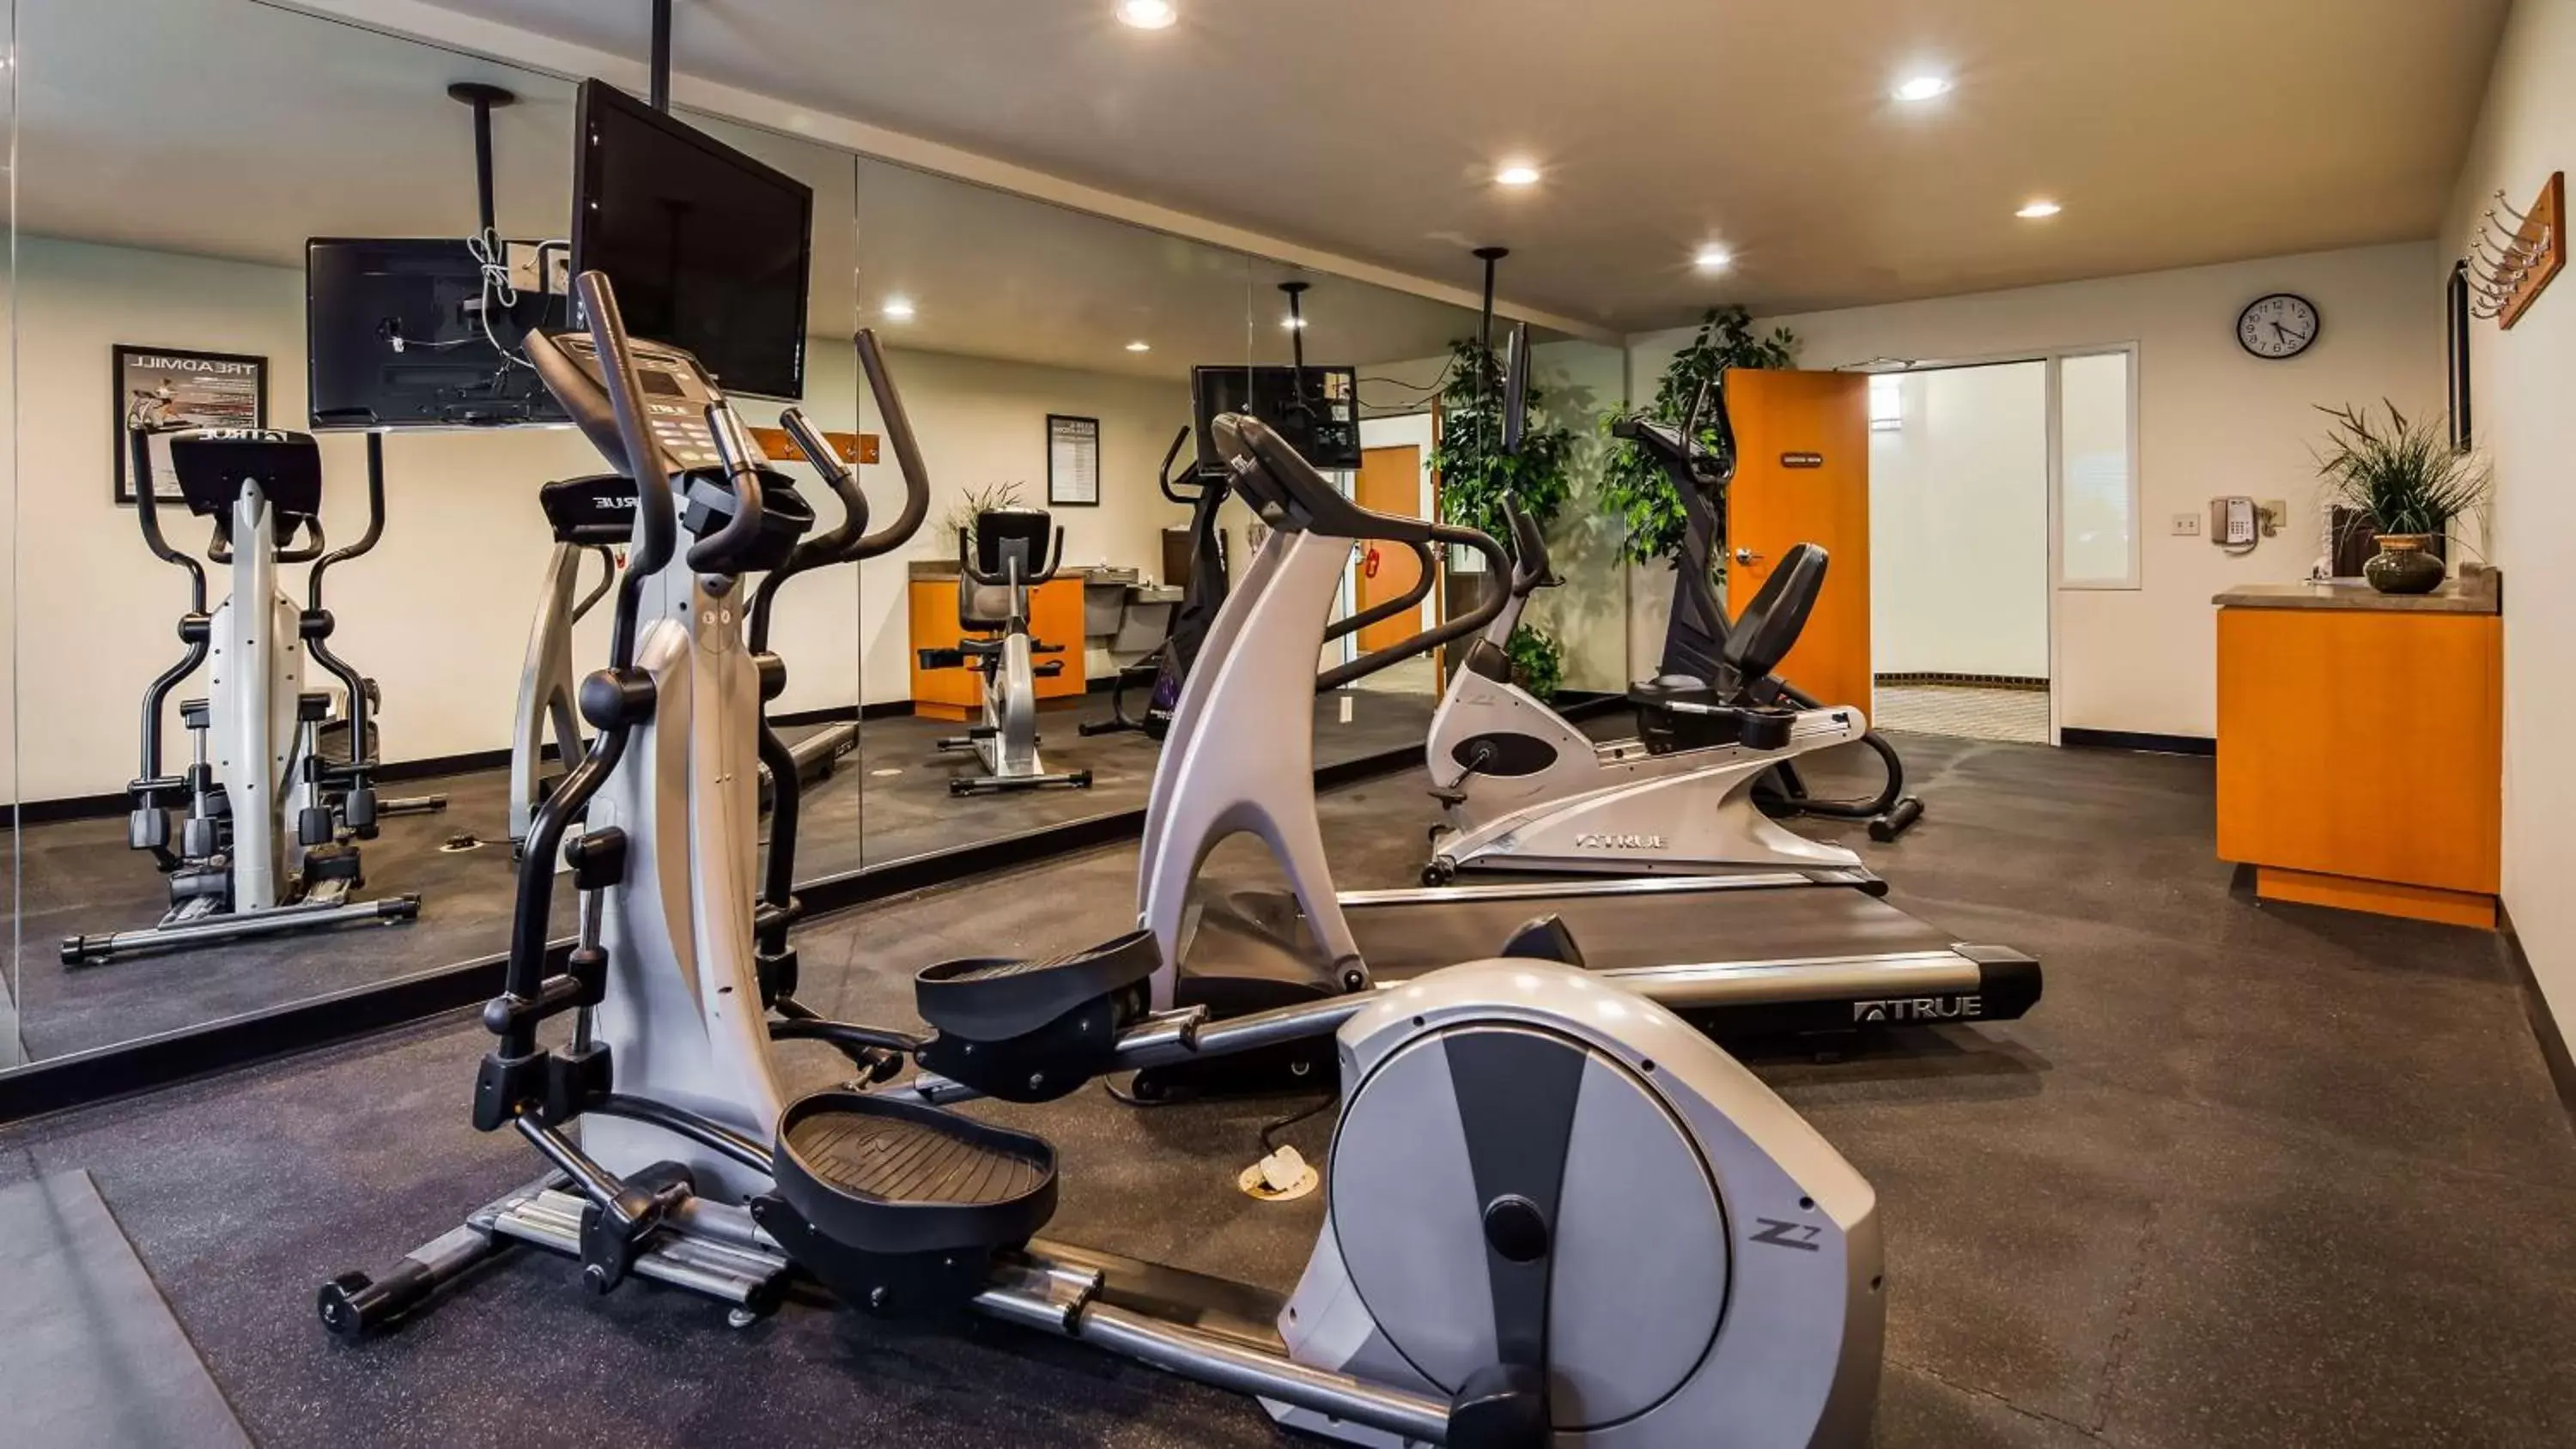 Fitness centre/facilities, Fitness Center/Facilities in Best Western Rose Quartz Inn